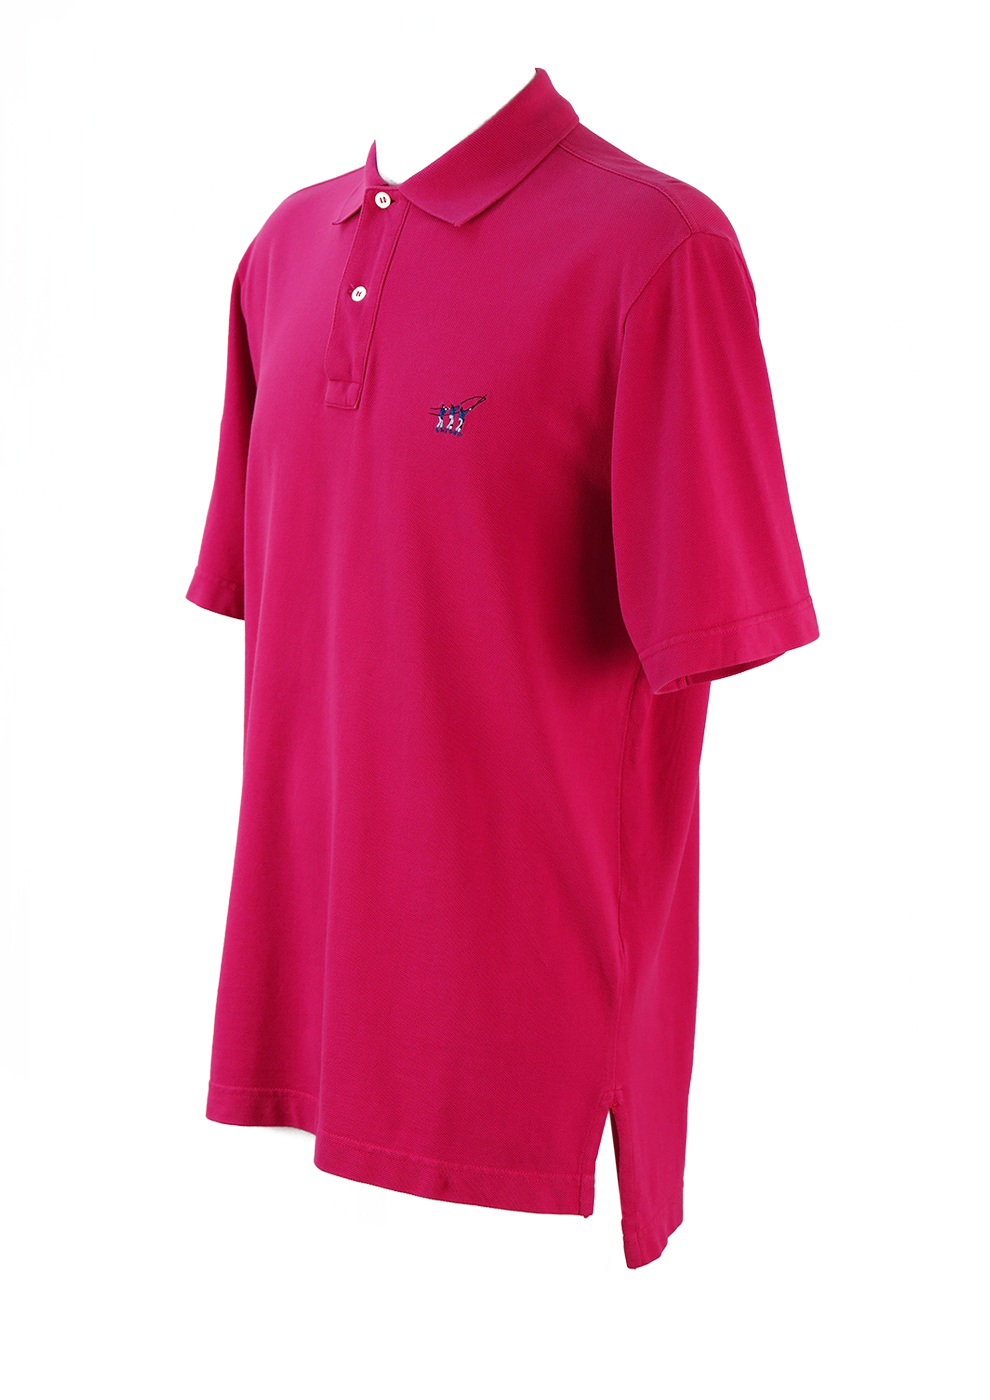 Henry Cotton's Fuchsia Pink Polo Shirt - L/XL | Reign Vintage